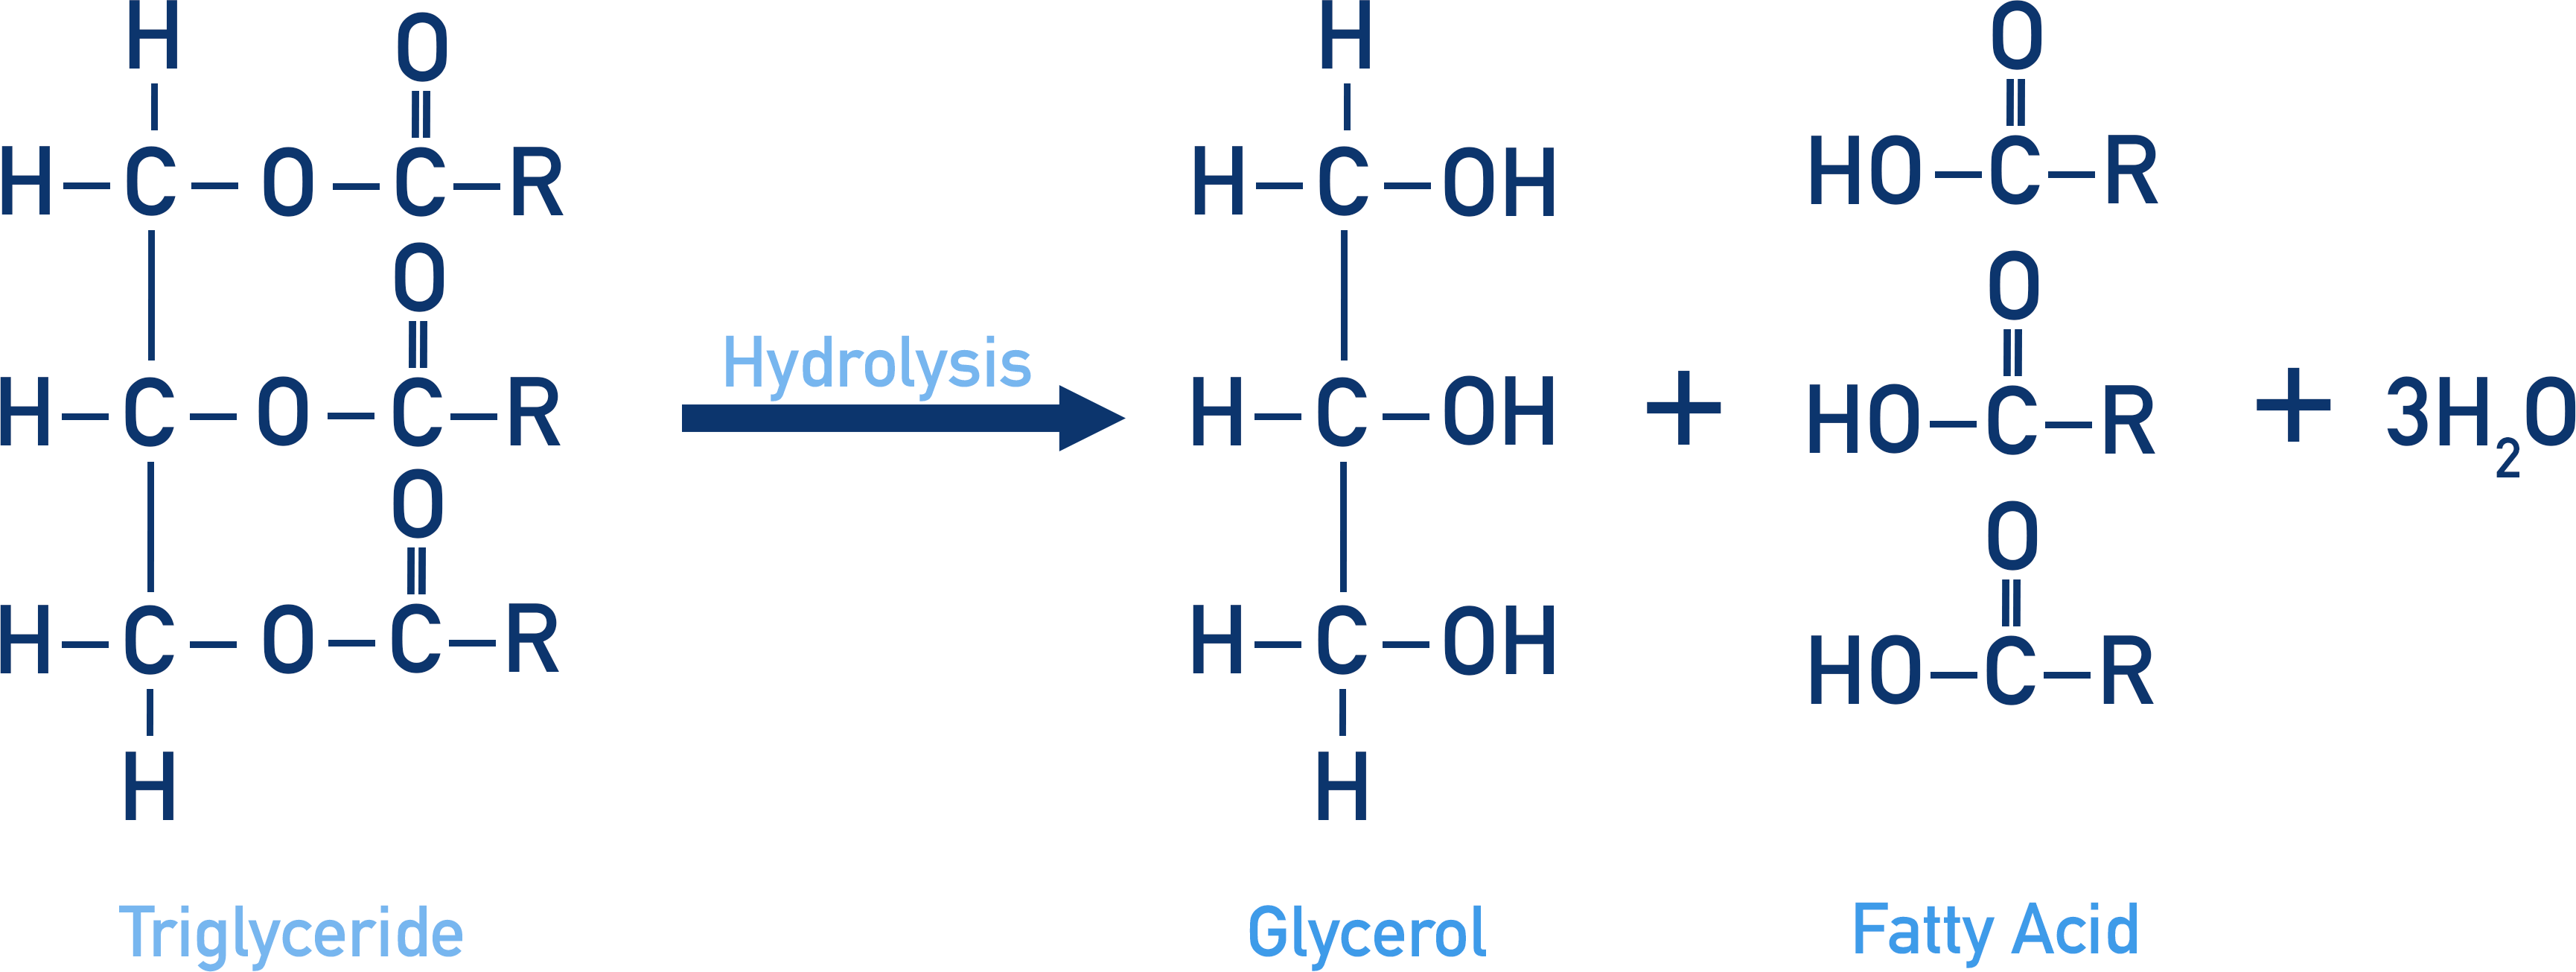 hydrolysis of triglyceride fat to glycerol and fatty acids